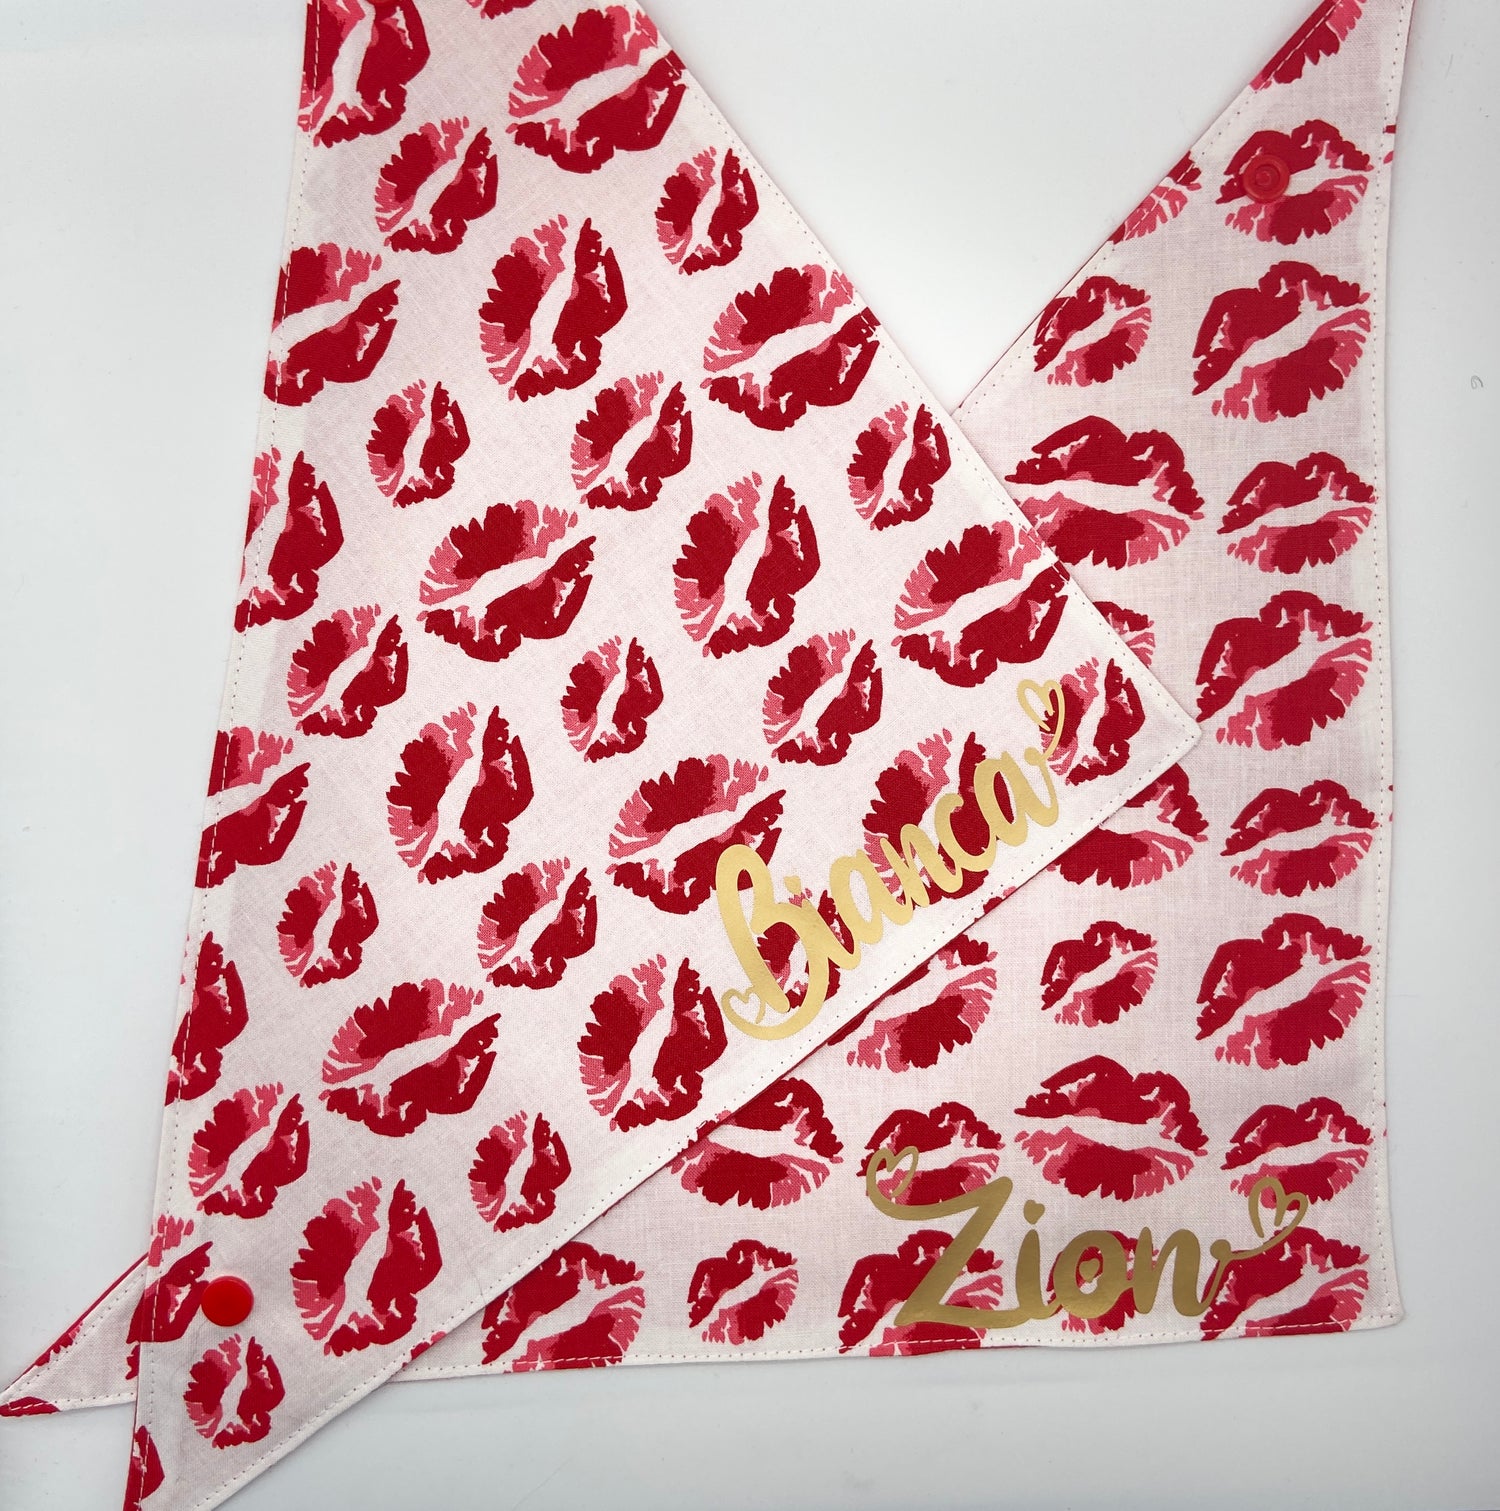 Personalized Dog Bandanas in kiss fabric